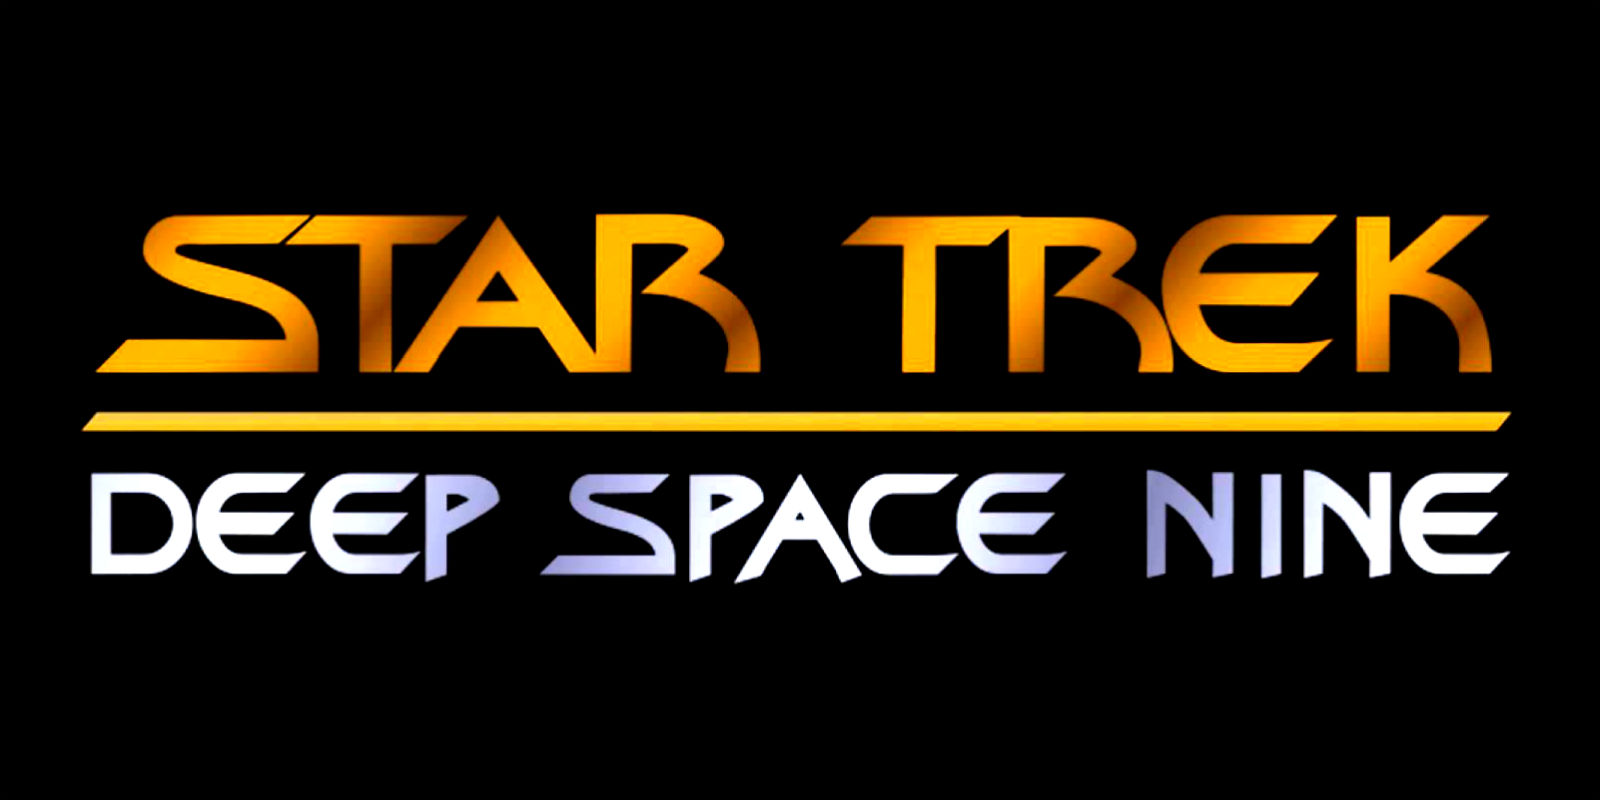 Star Trek: Deep Space Nine Backgrounds, Compatible - PC, Mobile, Gadgets| 1600x800 px